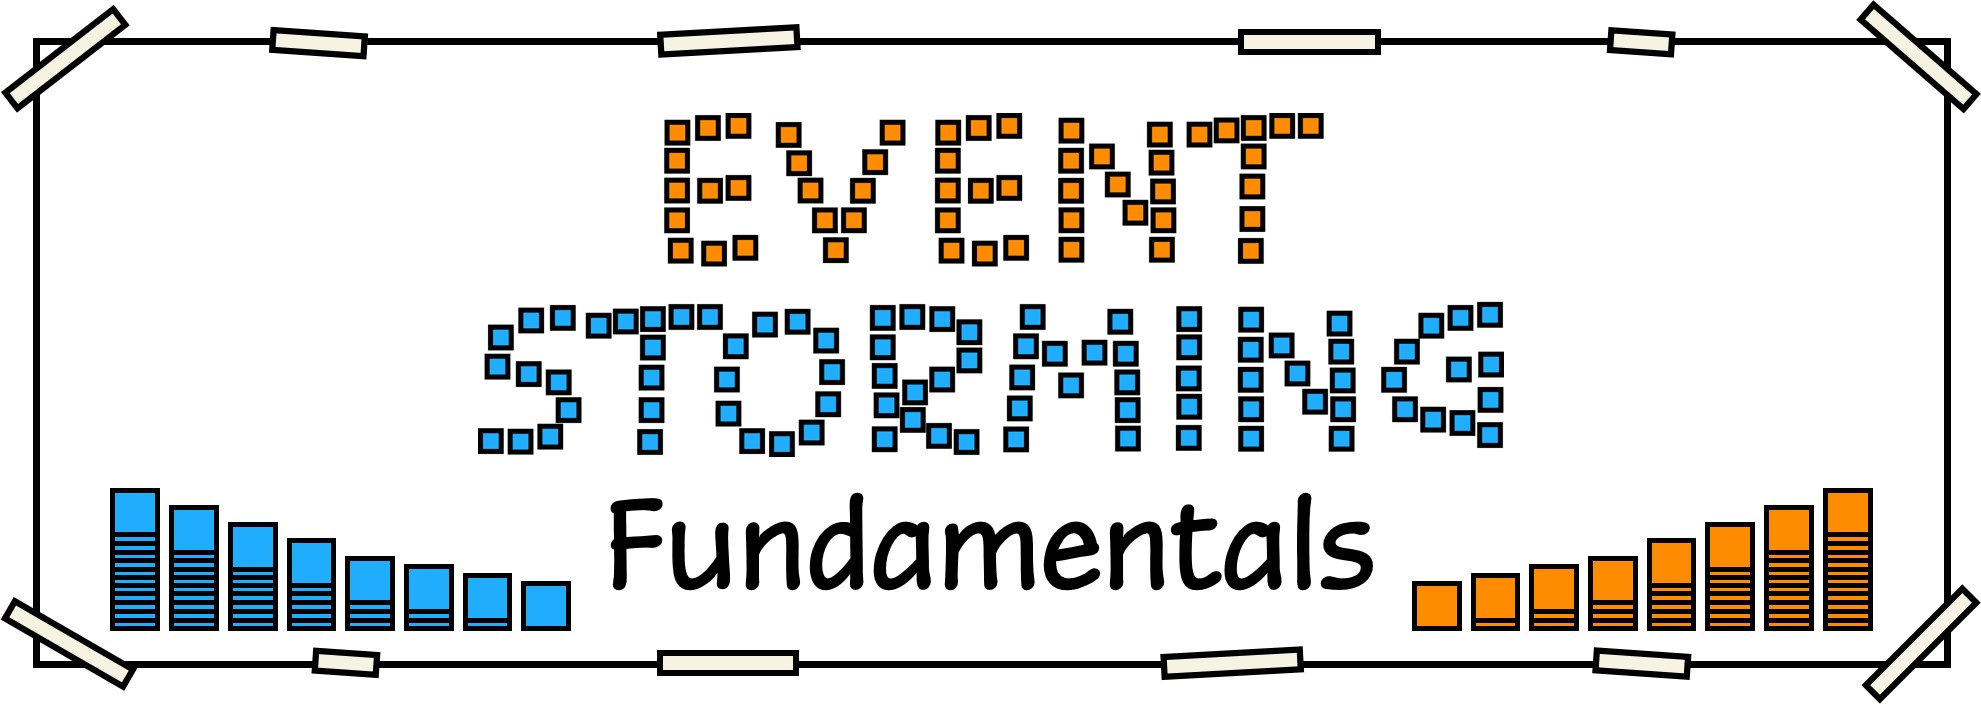 EventStorming Fundamentals Course